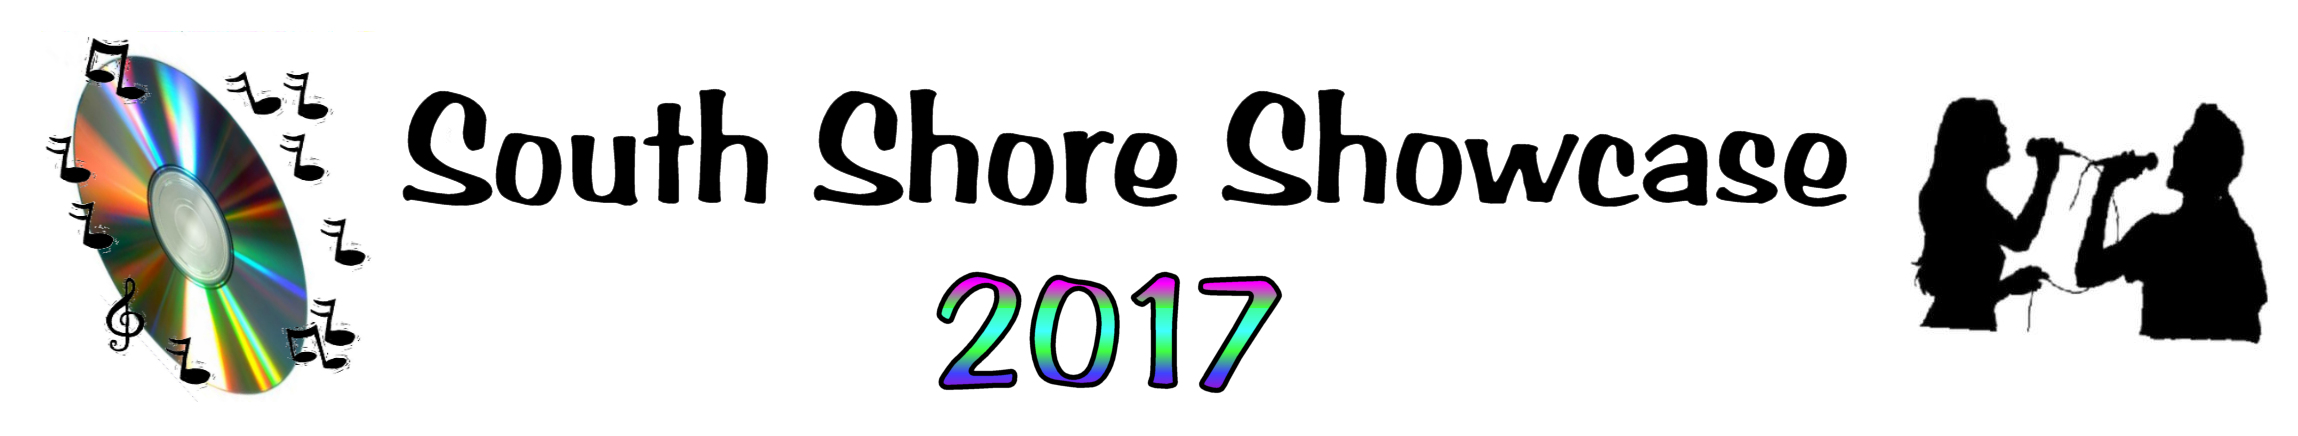 South Shore Showcase Letterhead Image